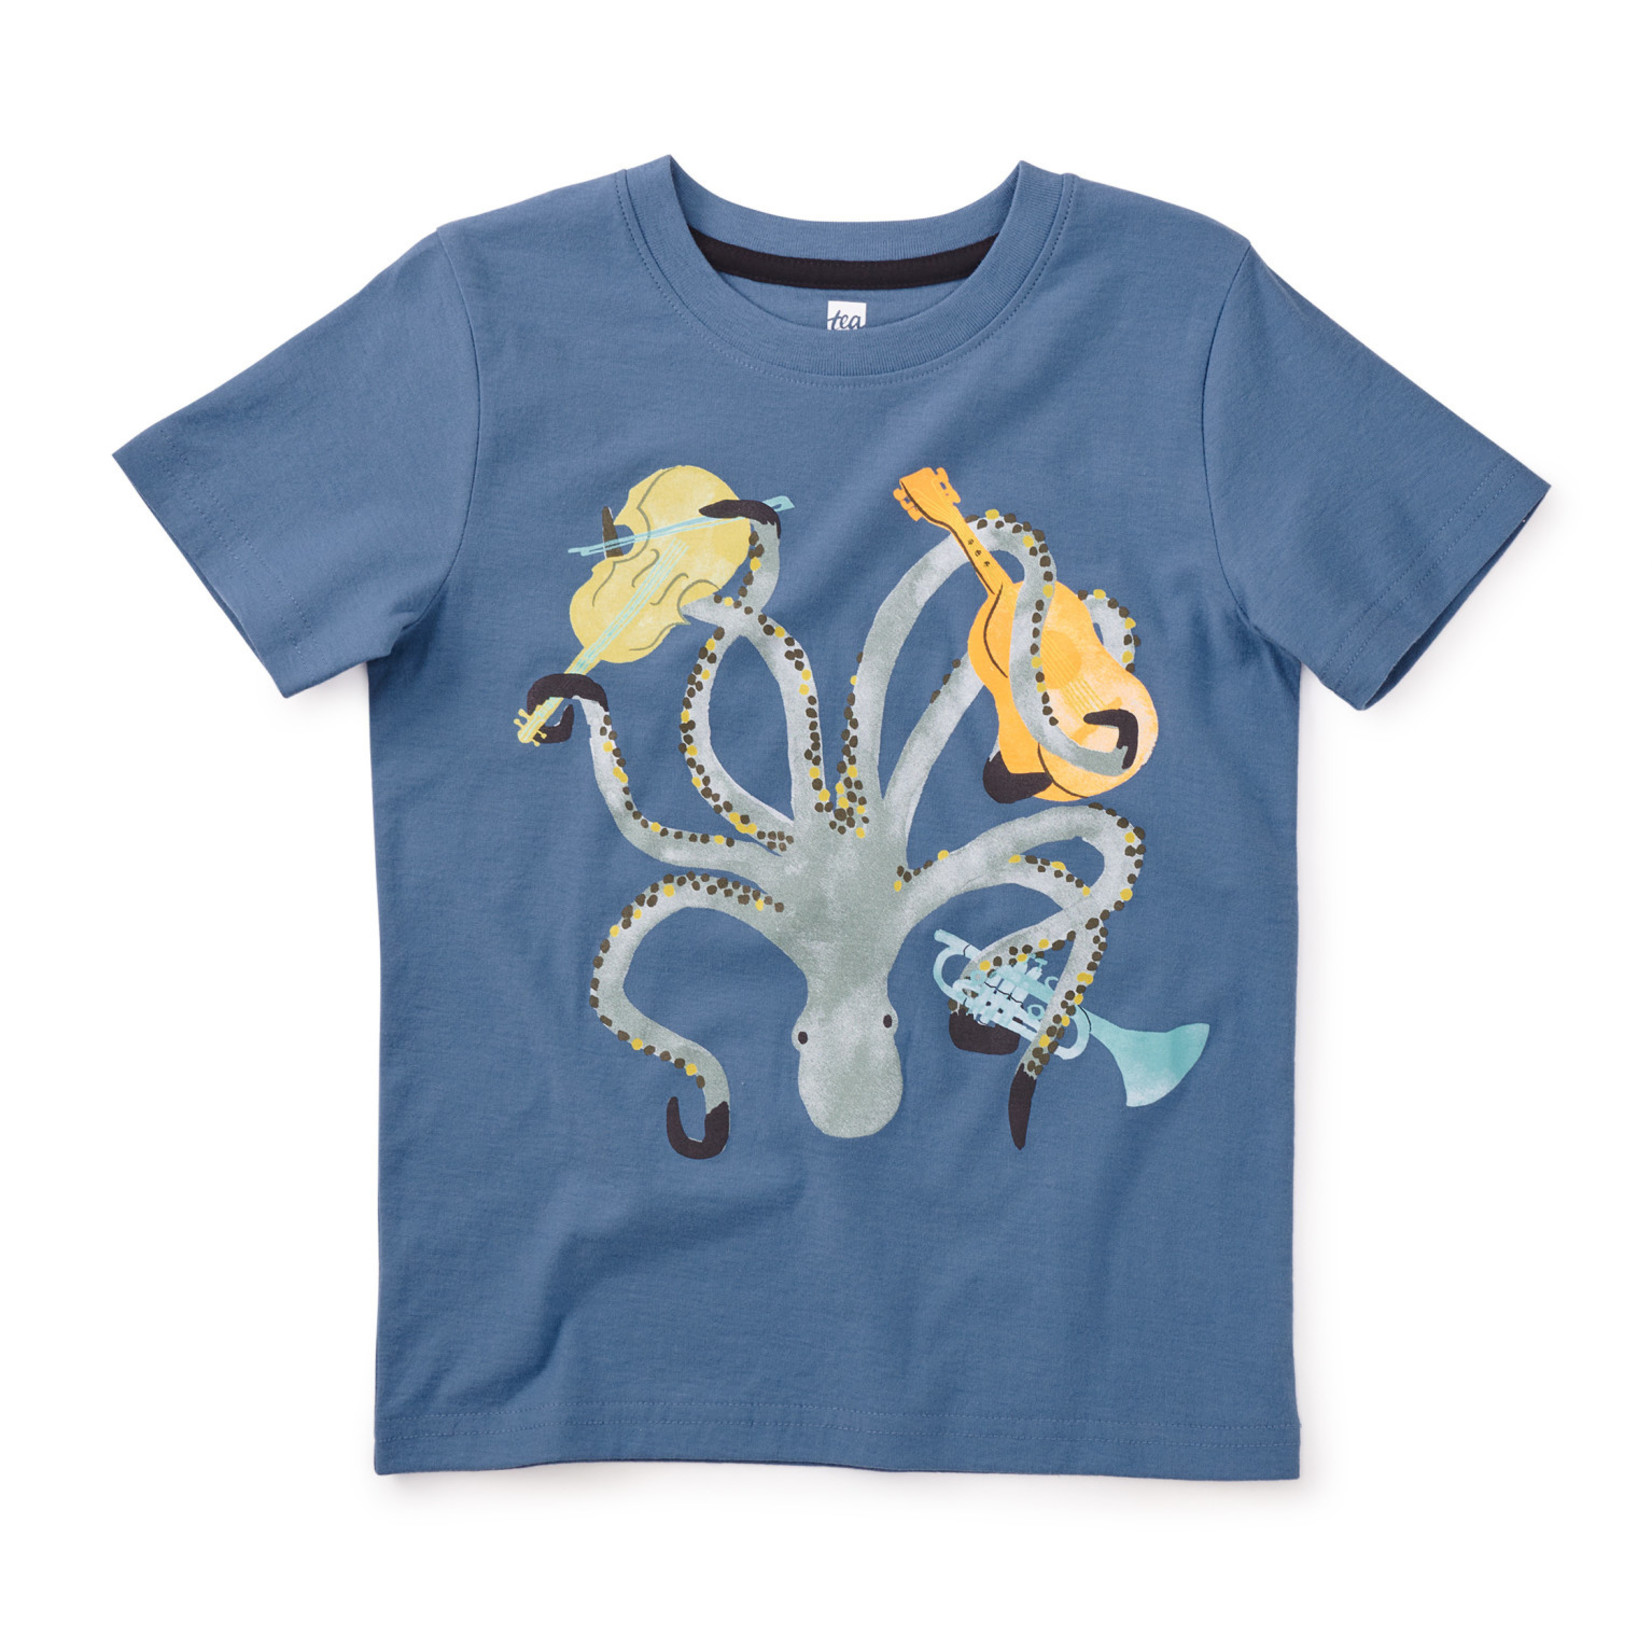 Tea Collection Musical Octopus Graphic Tee - Coronet Blue